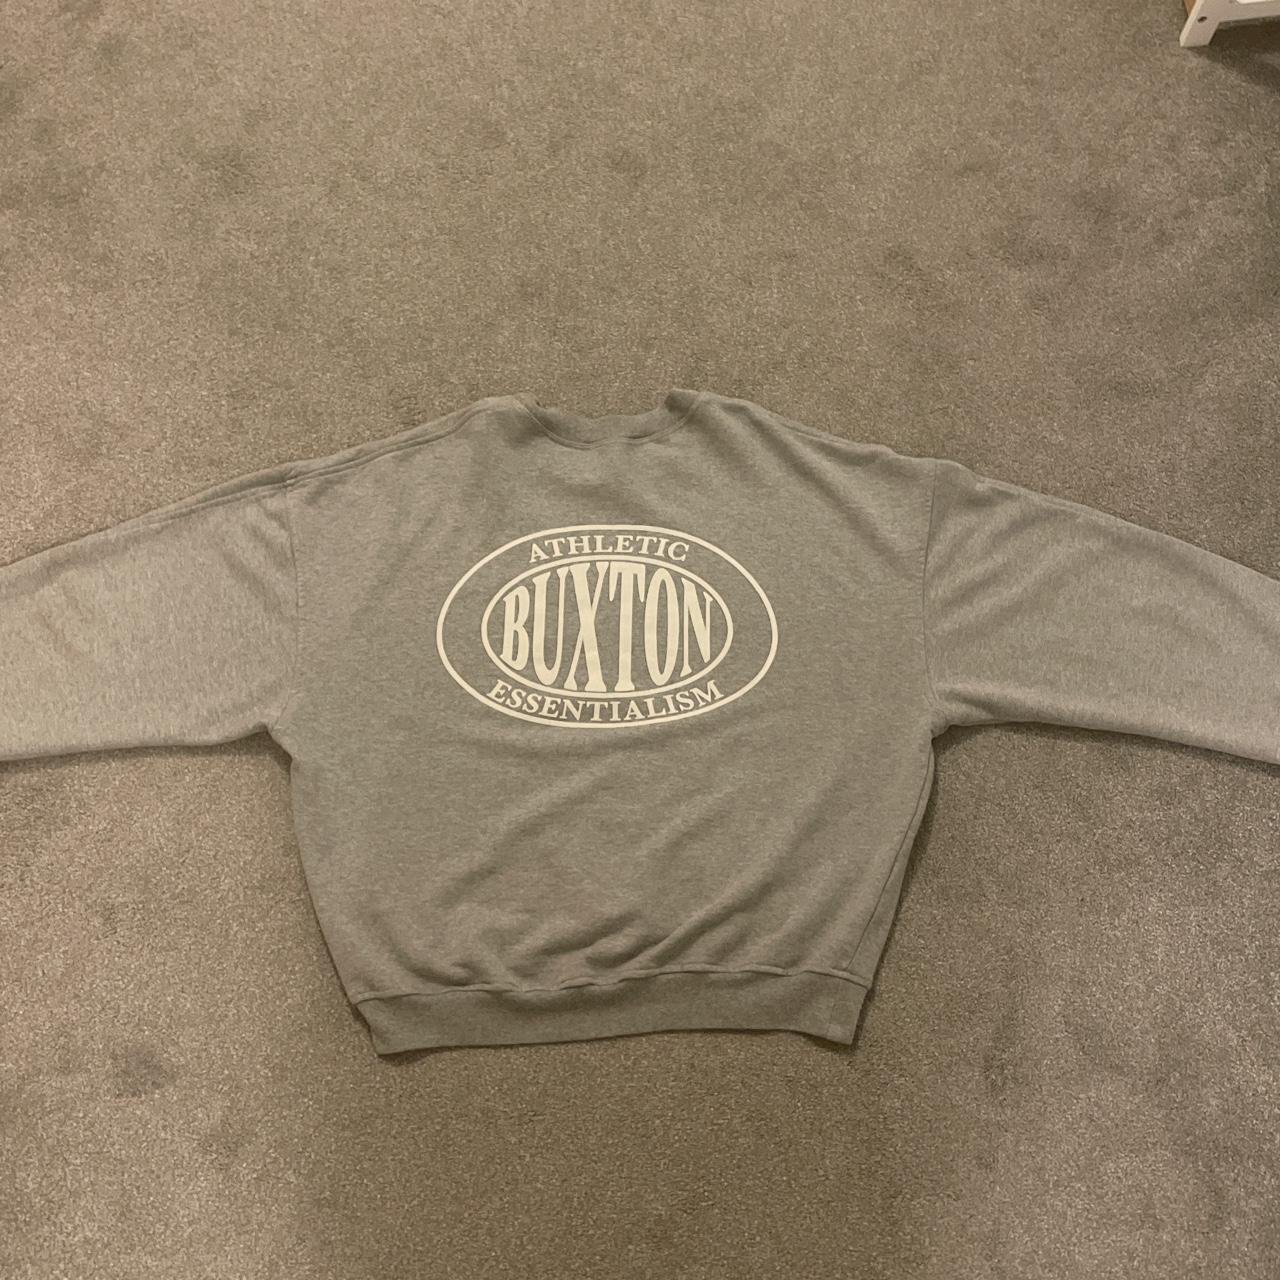 Cole Buxton Men's Grey and White Sweatshirt | Depop